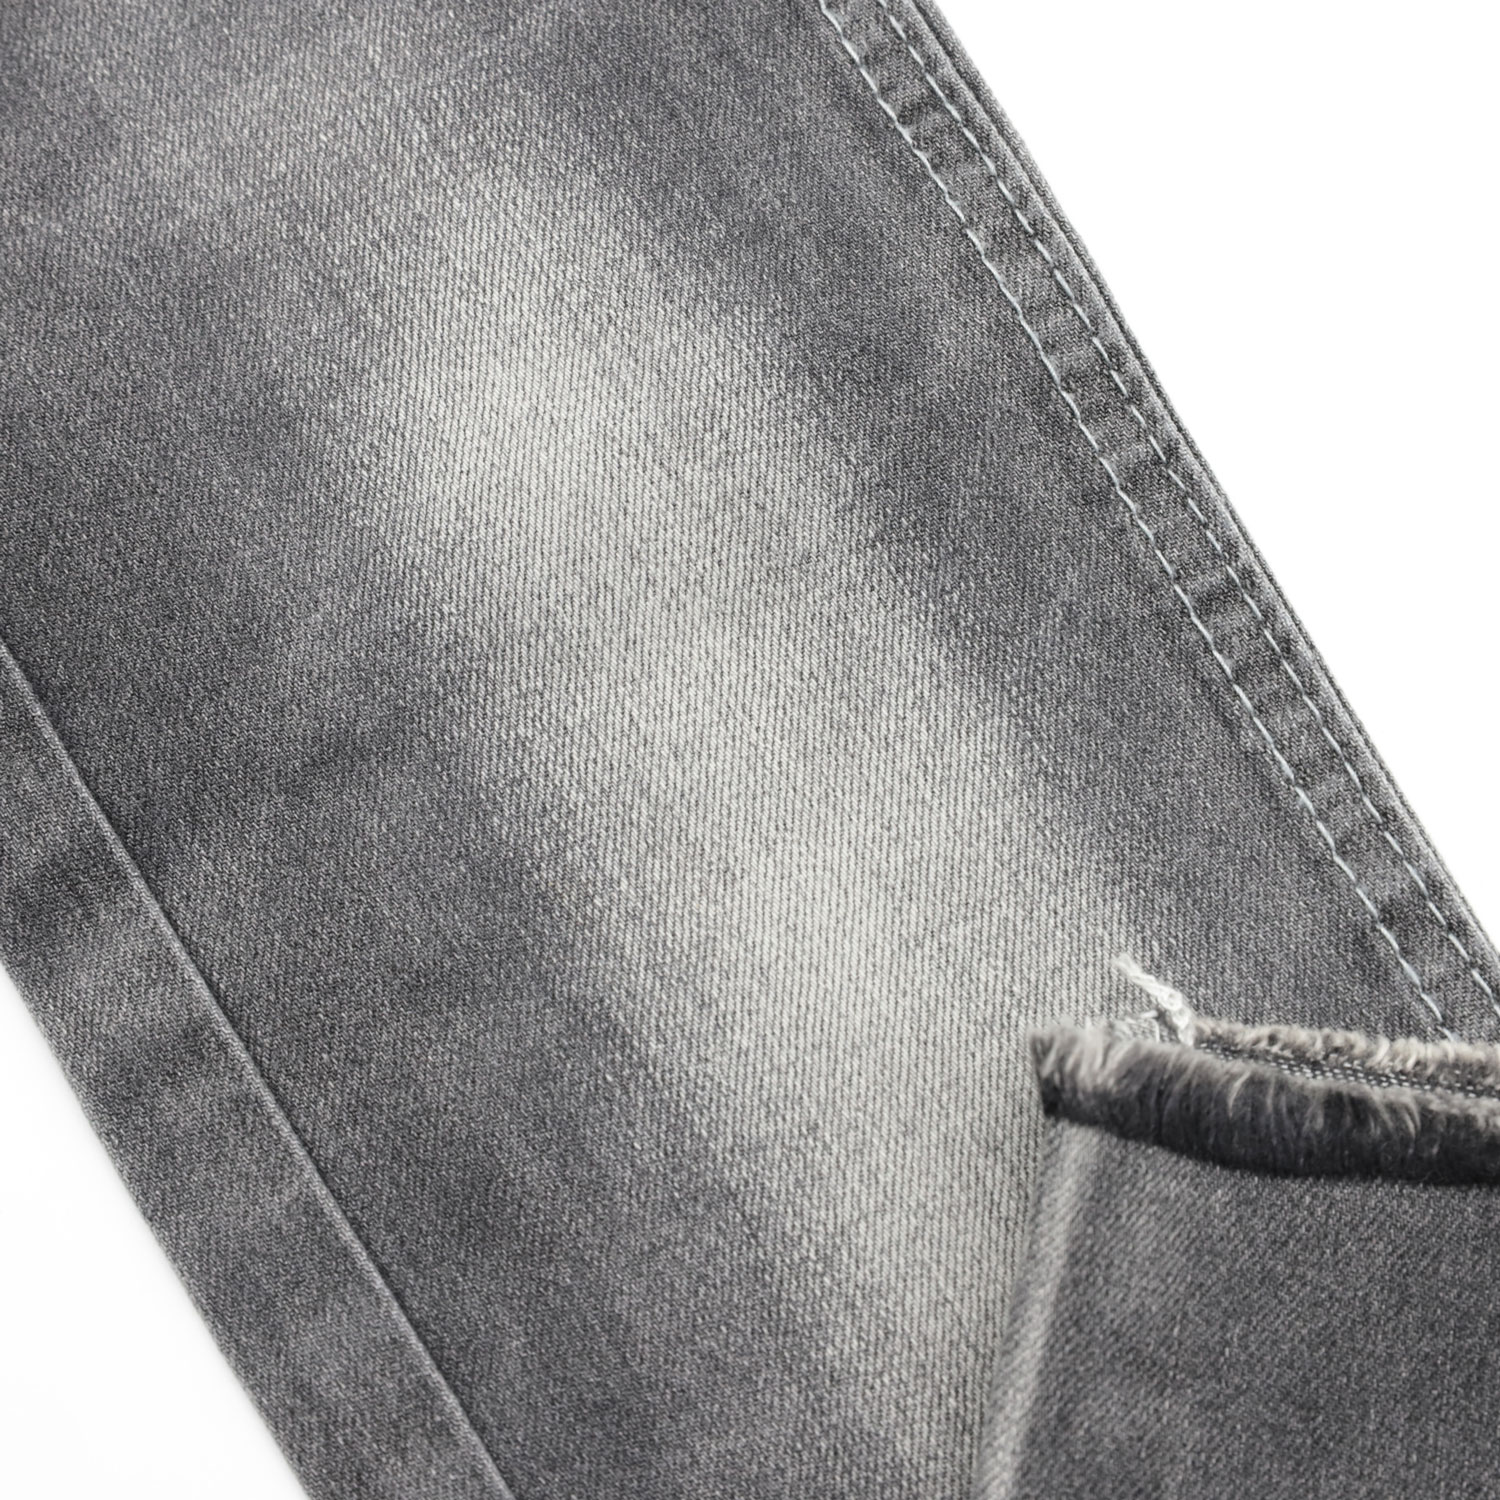 What Is a High-quality Stretch Denim Fabric? 2